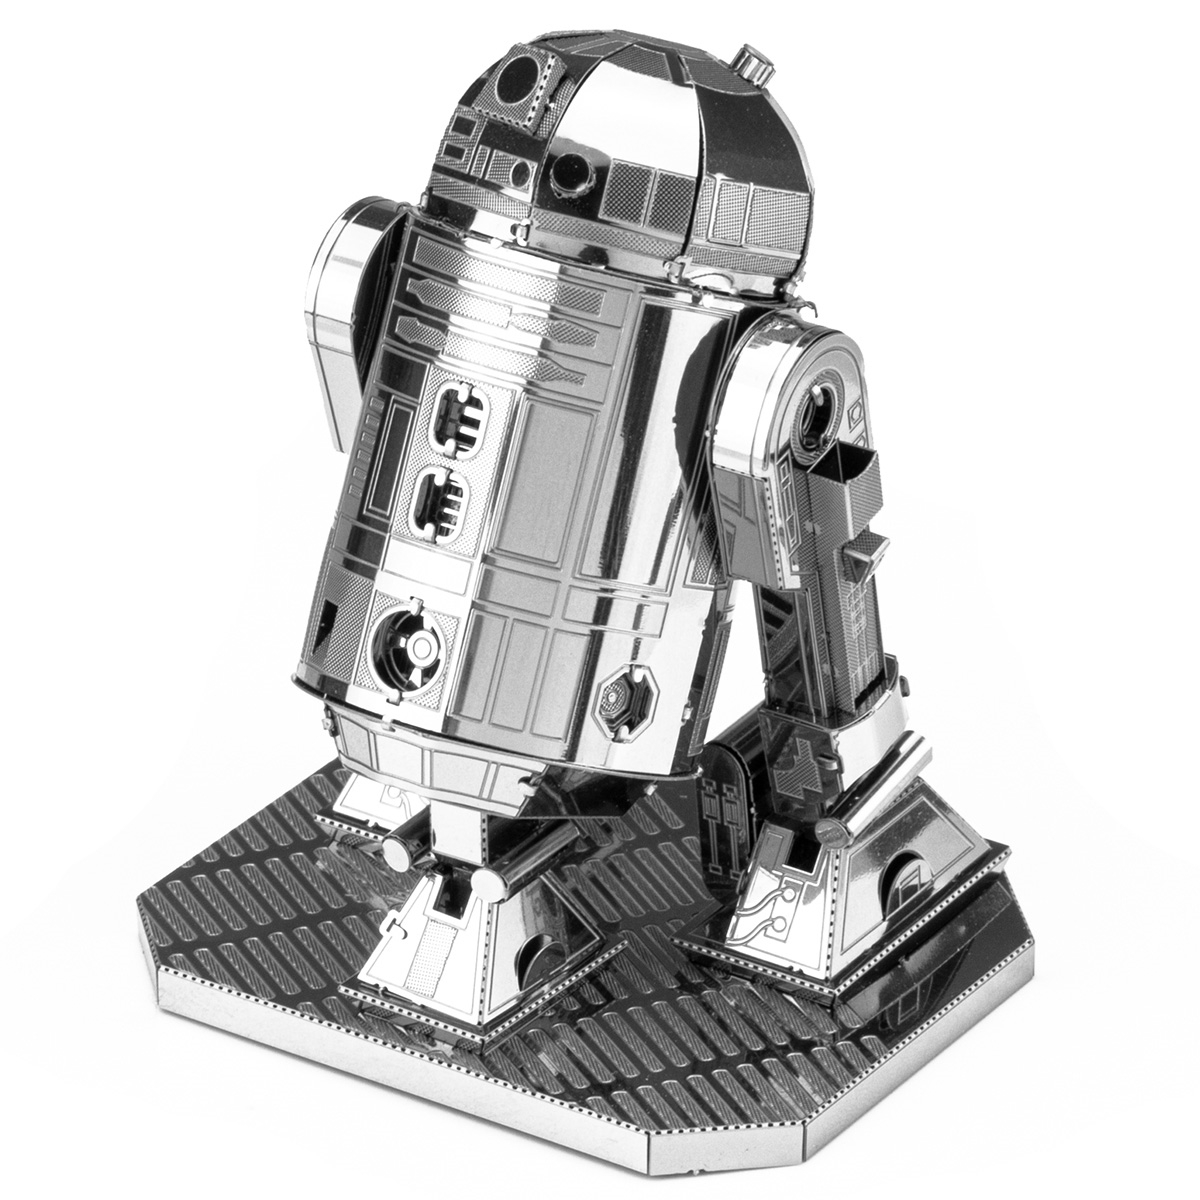 Fascinations Metal Earth 3D Model Kit Star Wars R2 D2 